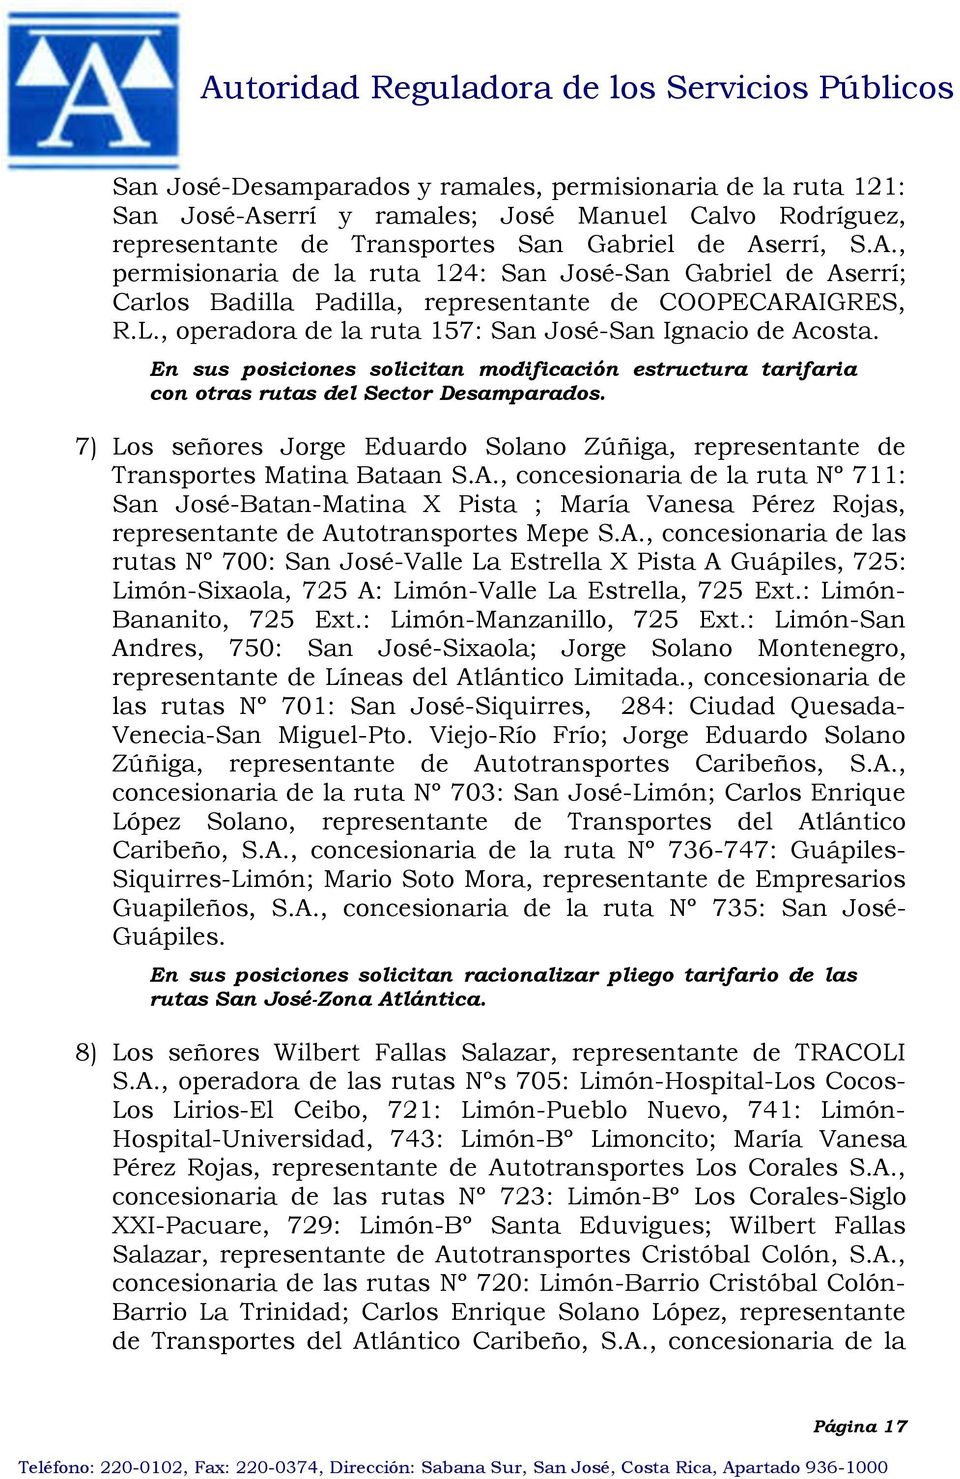 7) Los señores Jorge Eduardo Solano Zúñiga, representante de Transportes Matina Bataan S.A.